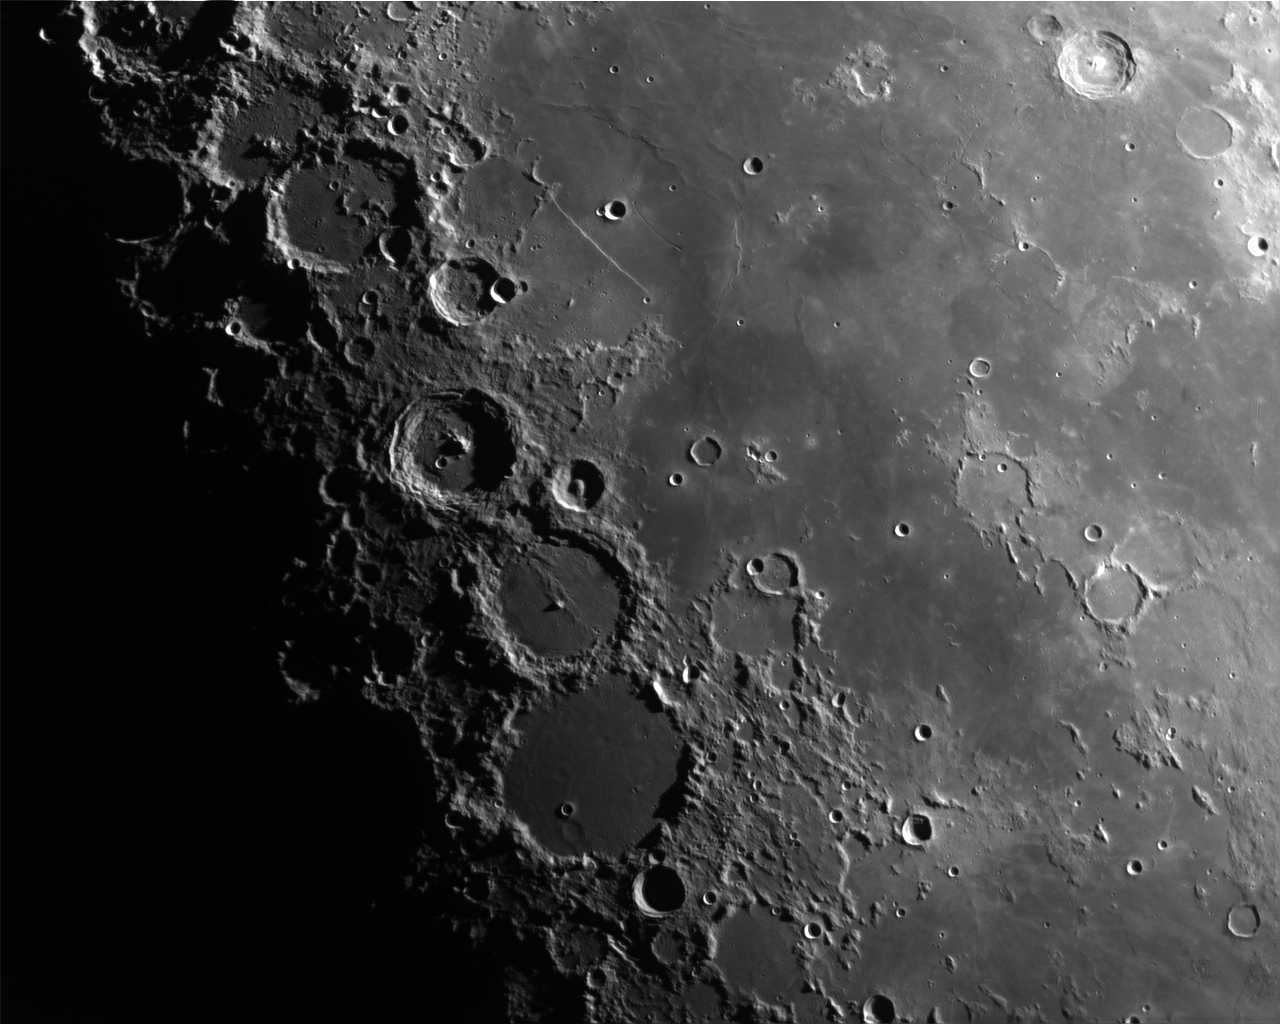 Lune CN212 IDS 3240